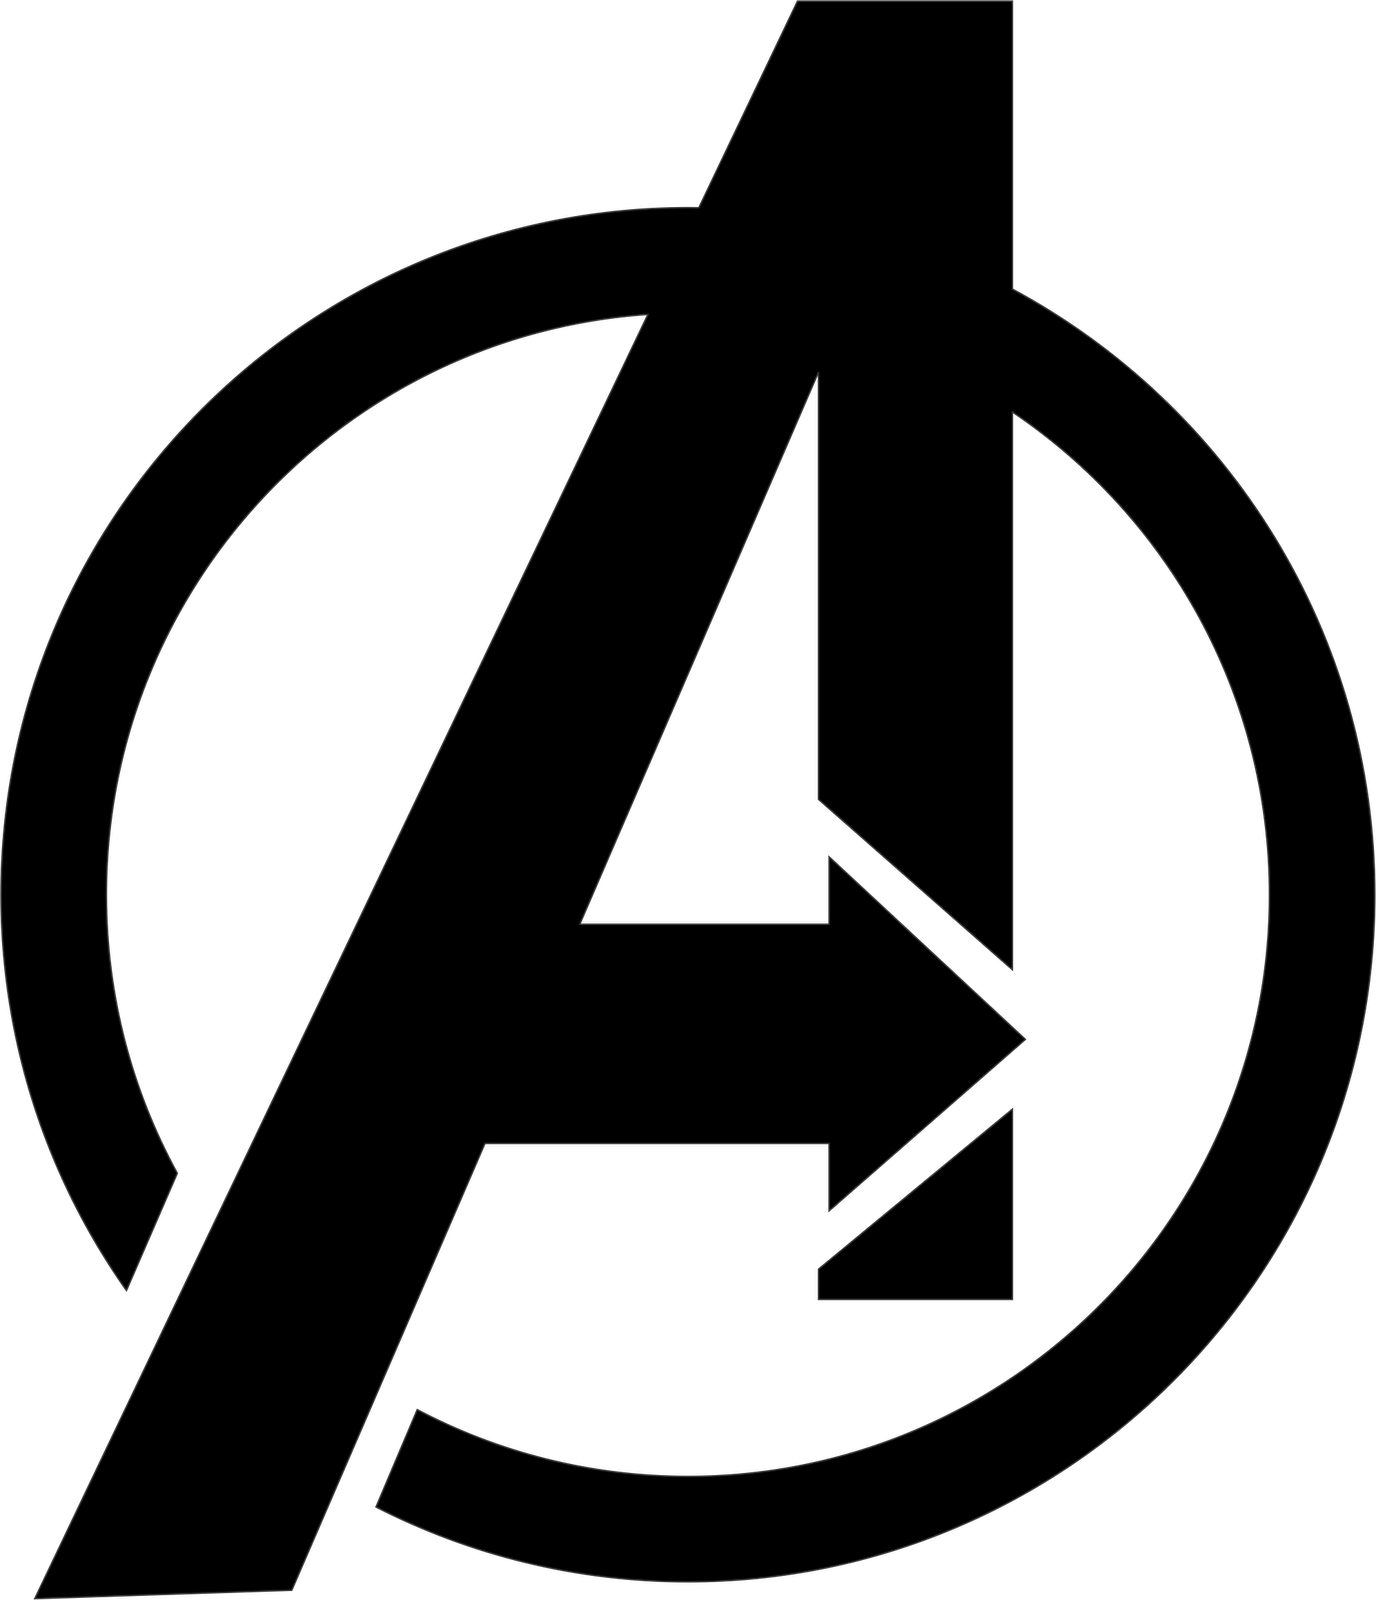 Avangers Logo - Avengers Logo PNG Transparent Avengers Logo.PNG Images. | PlusPNG